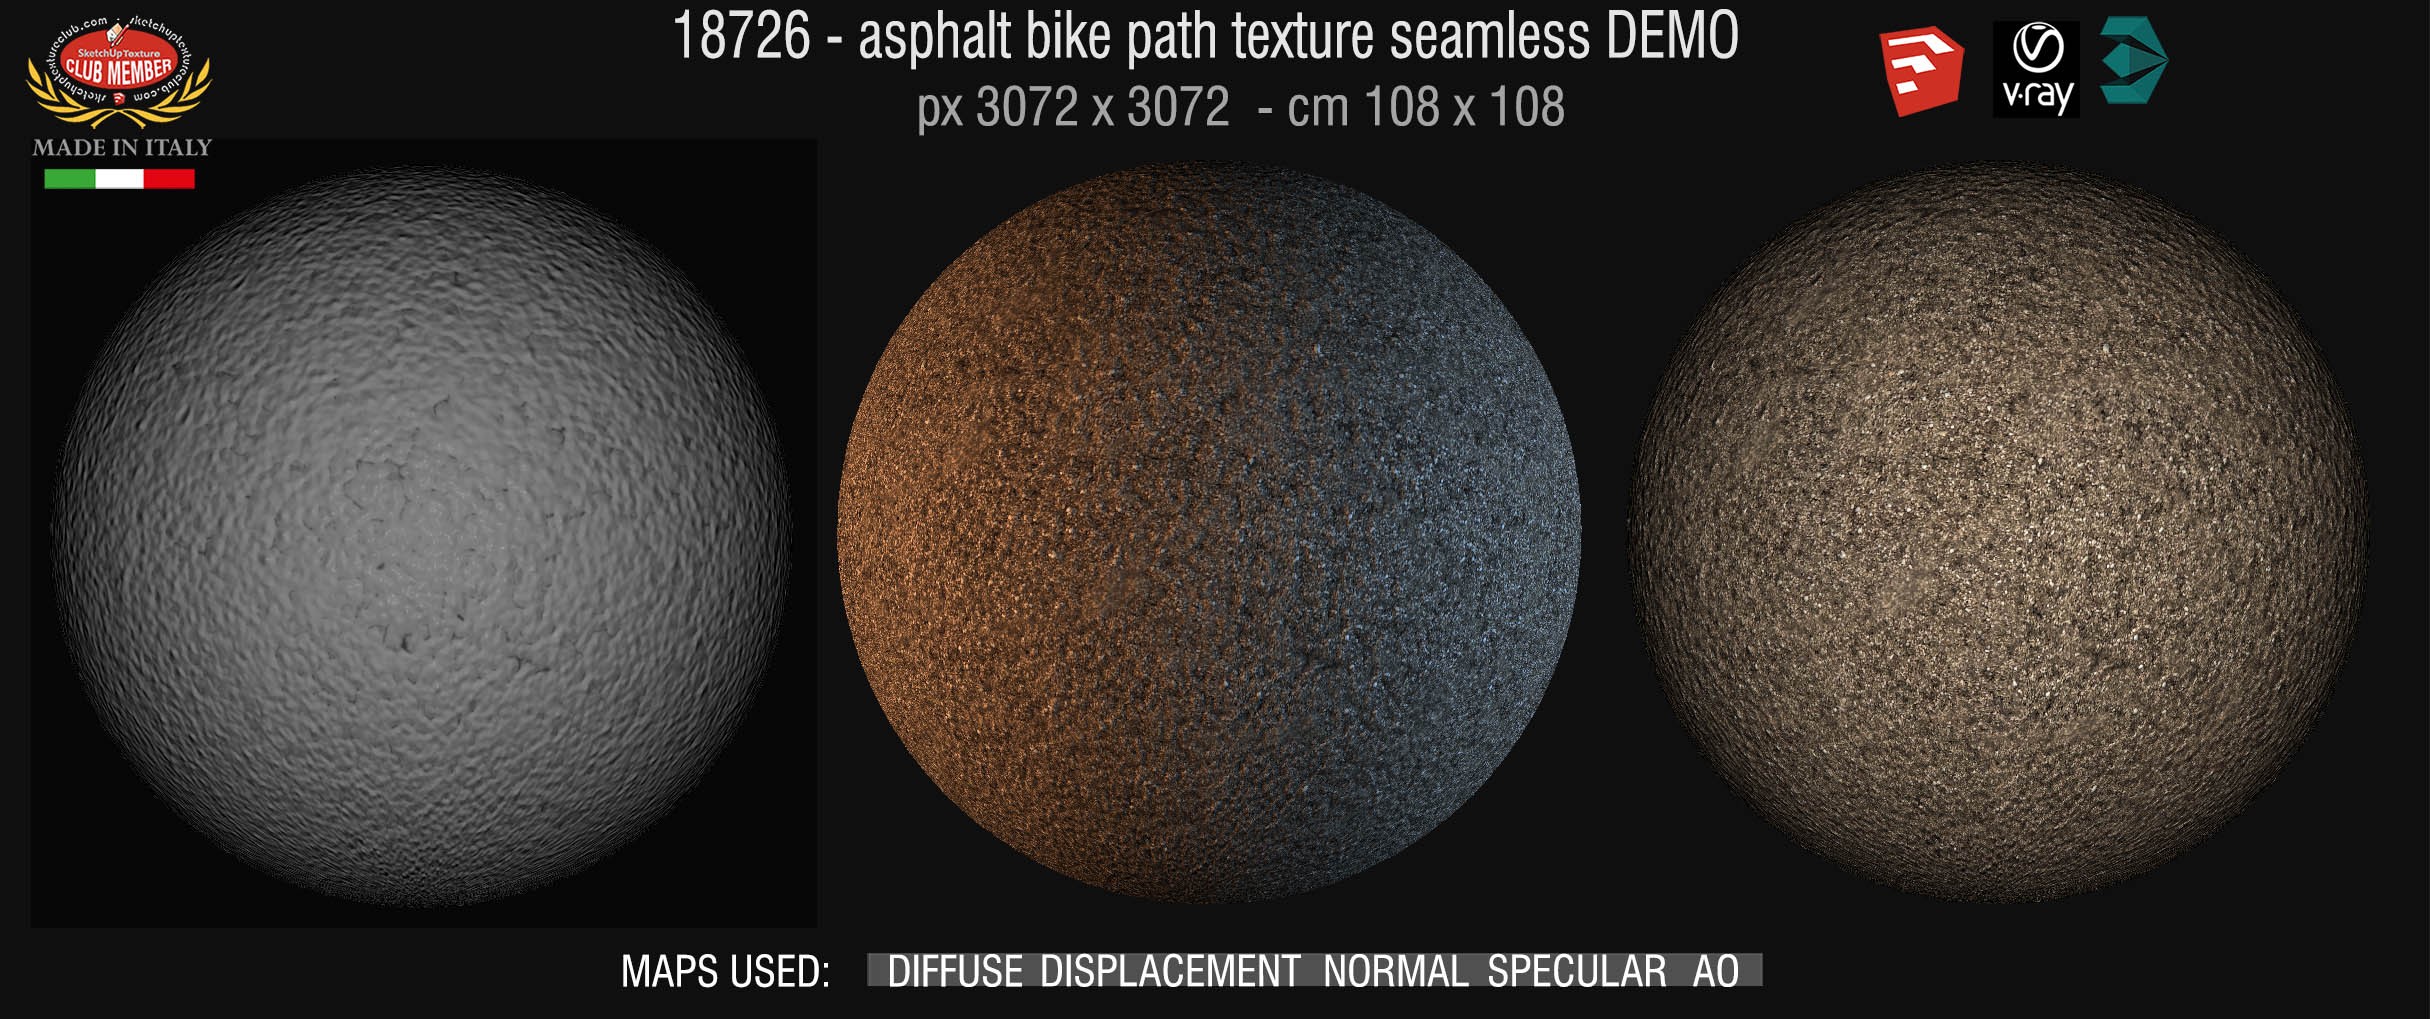 18726 Asphalt bike path texture seamless + maps DEMO